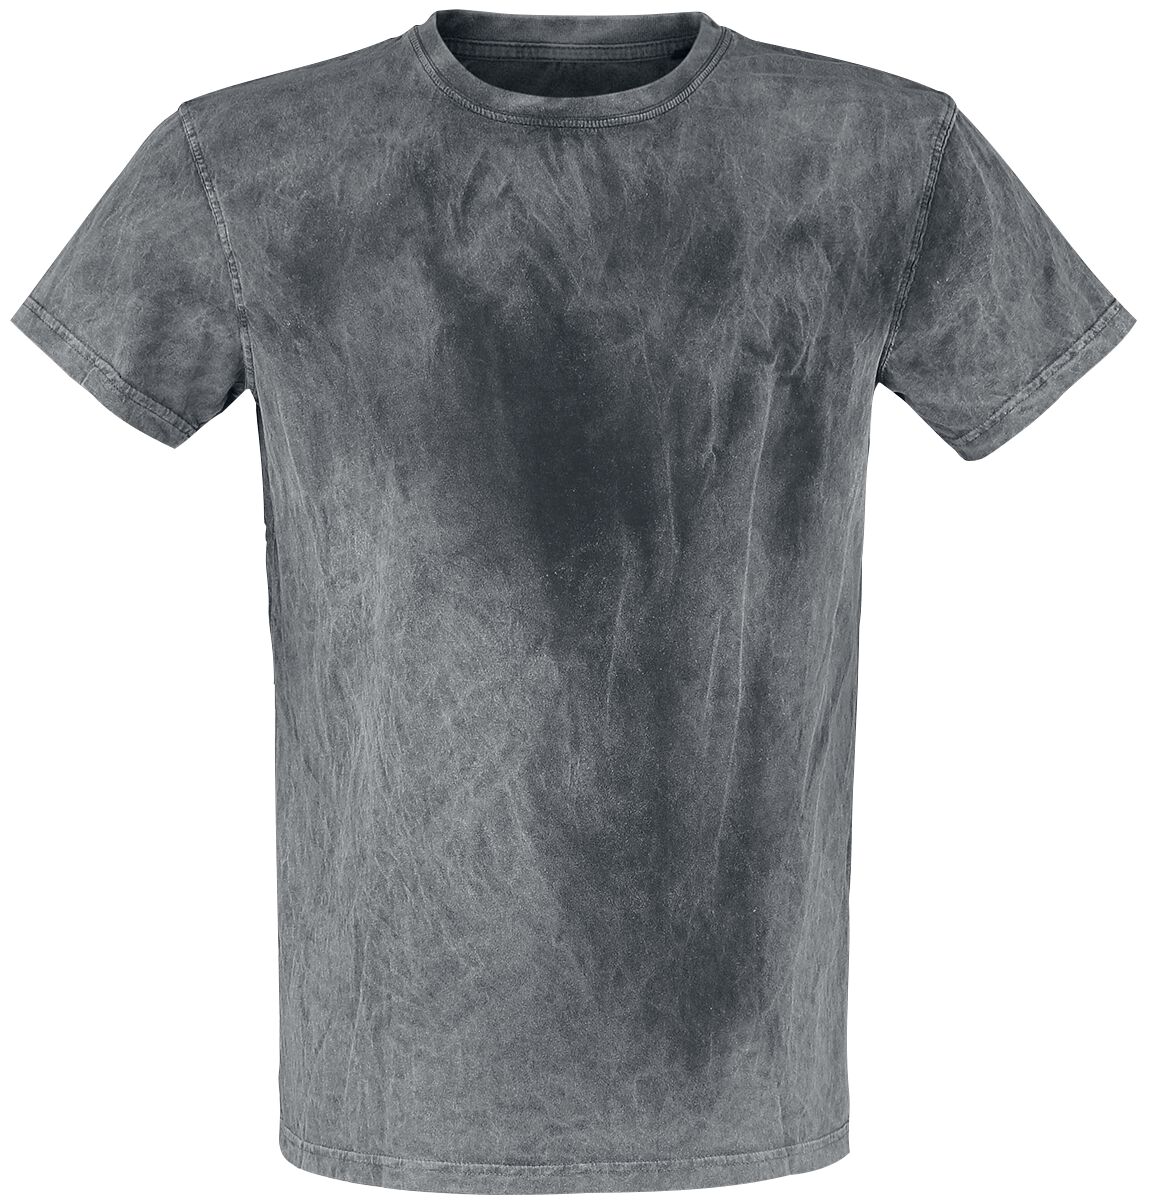 Outer Vision T-Shirt - Man`s T-Shirt - S bis XXL - für Männer - Größe XL - grau